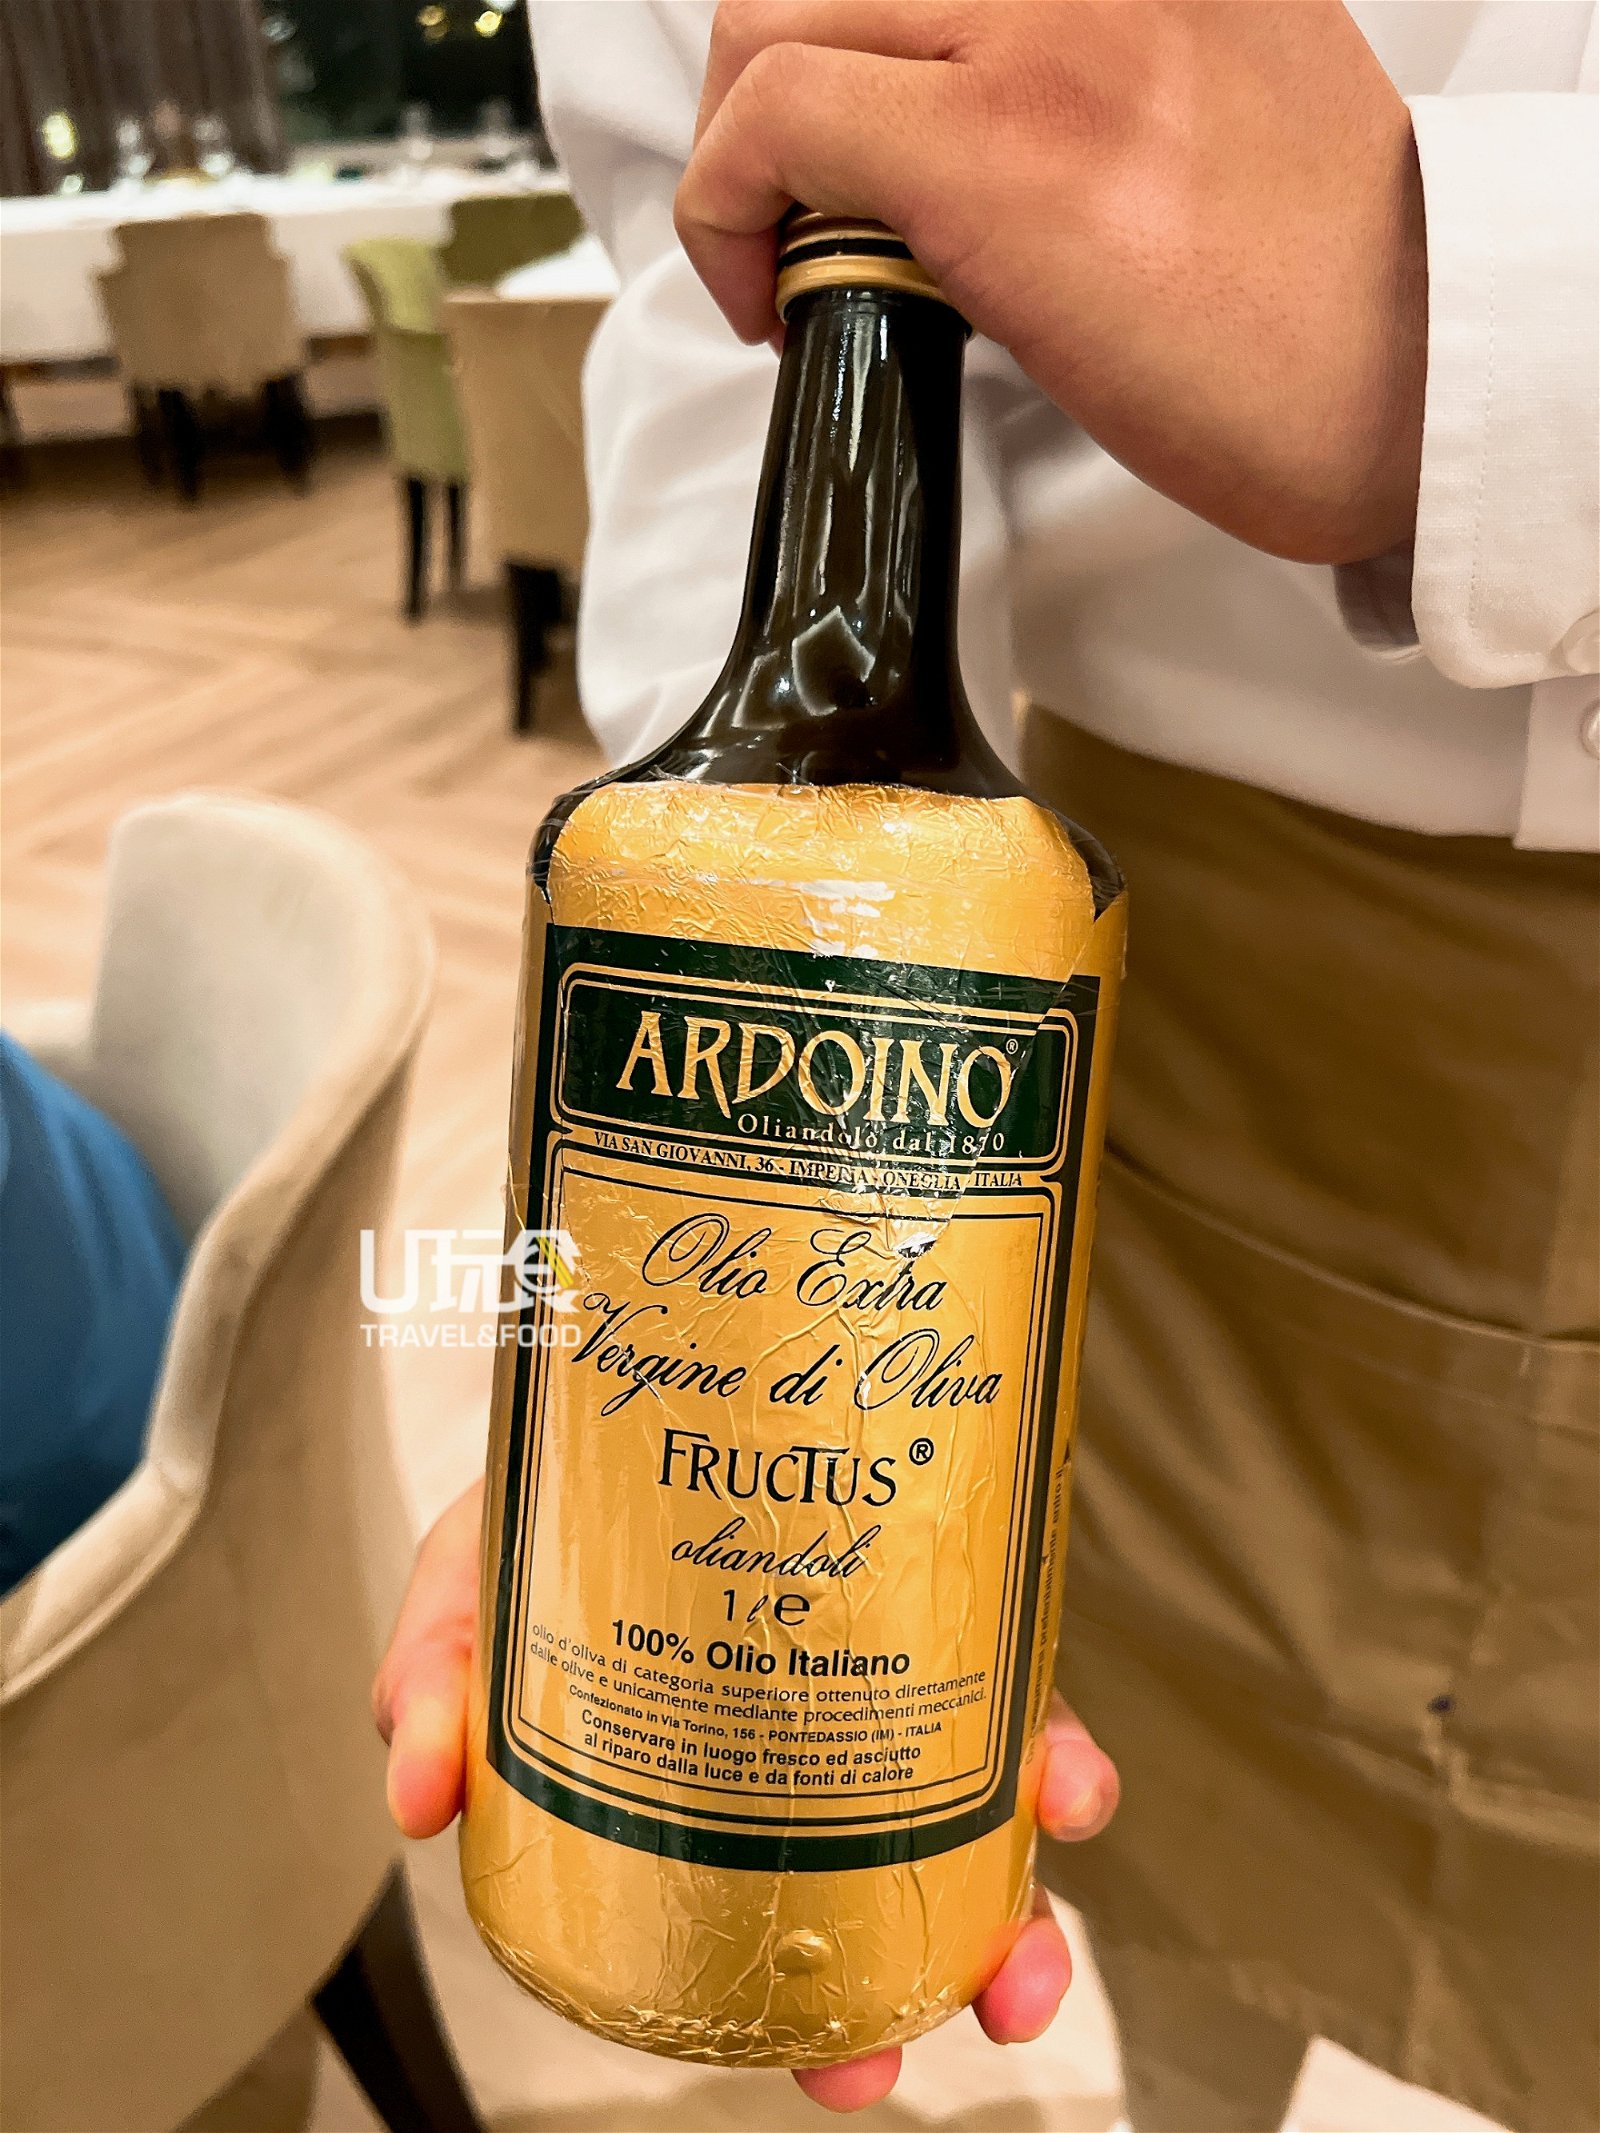 Ardoino橄榄油搭上香草冰淇淋成立意想不到的美食组合。